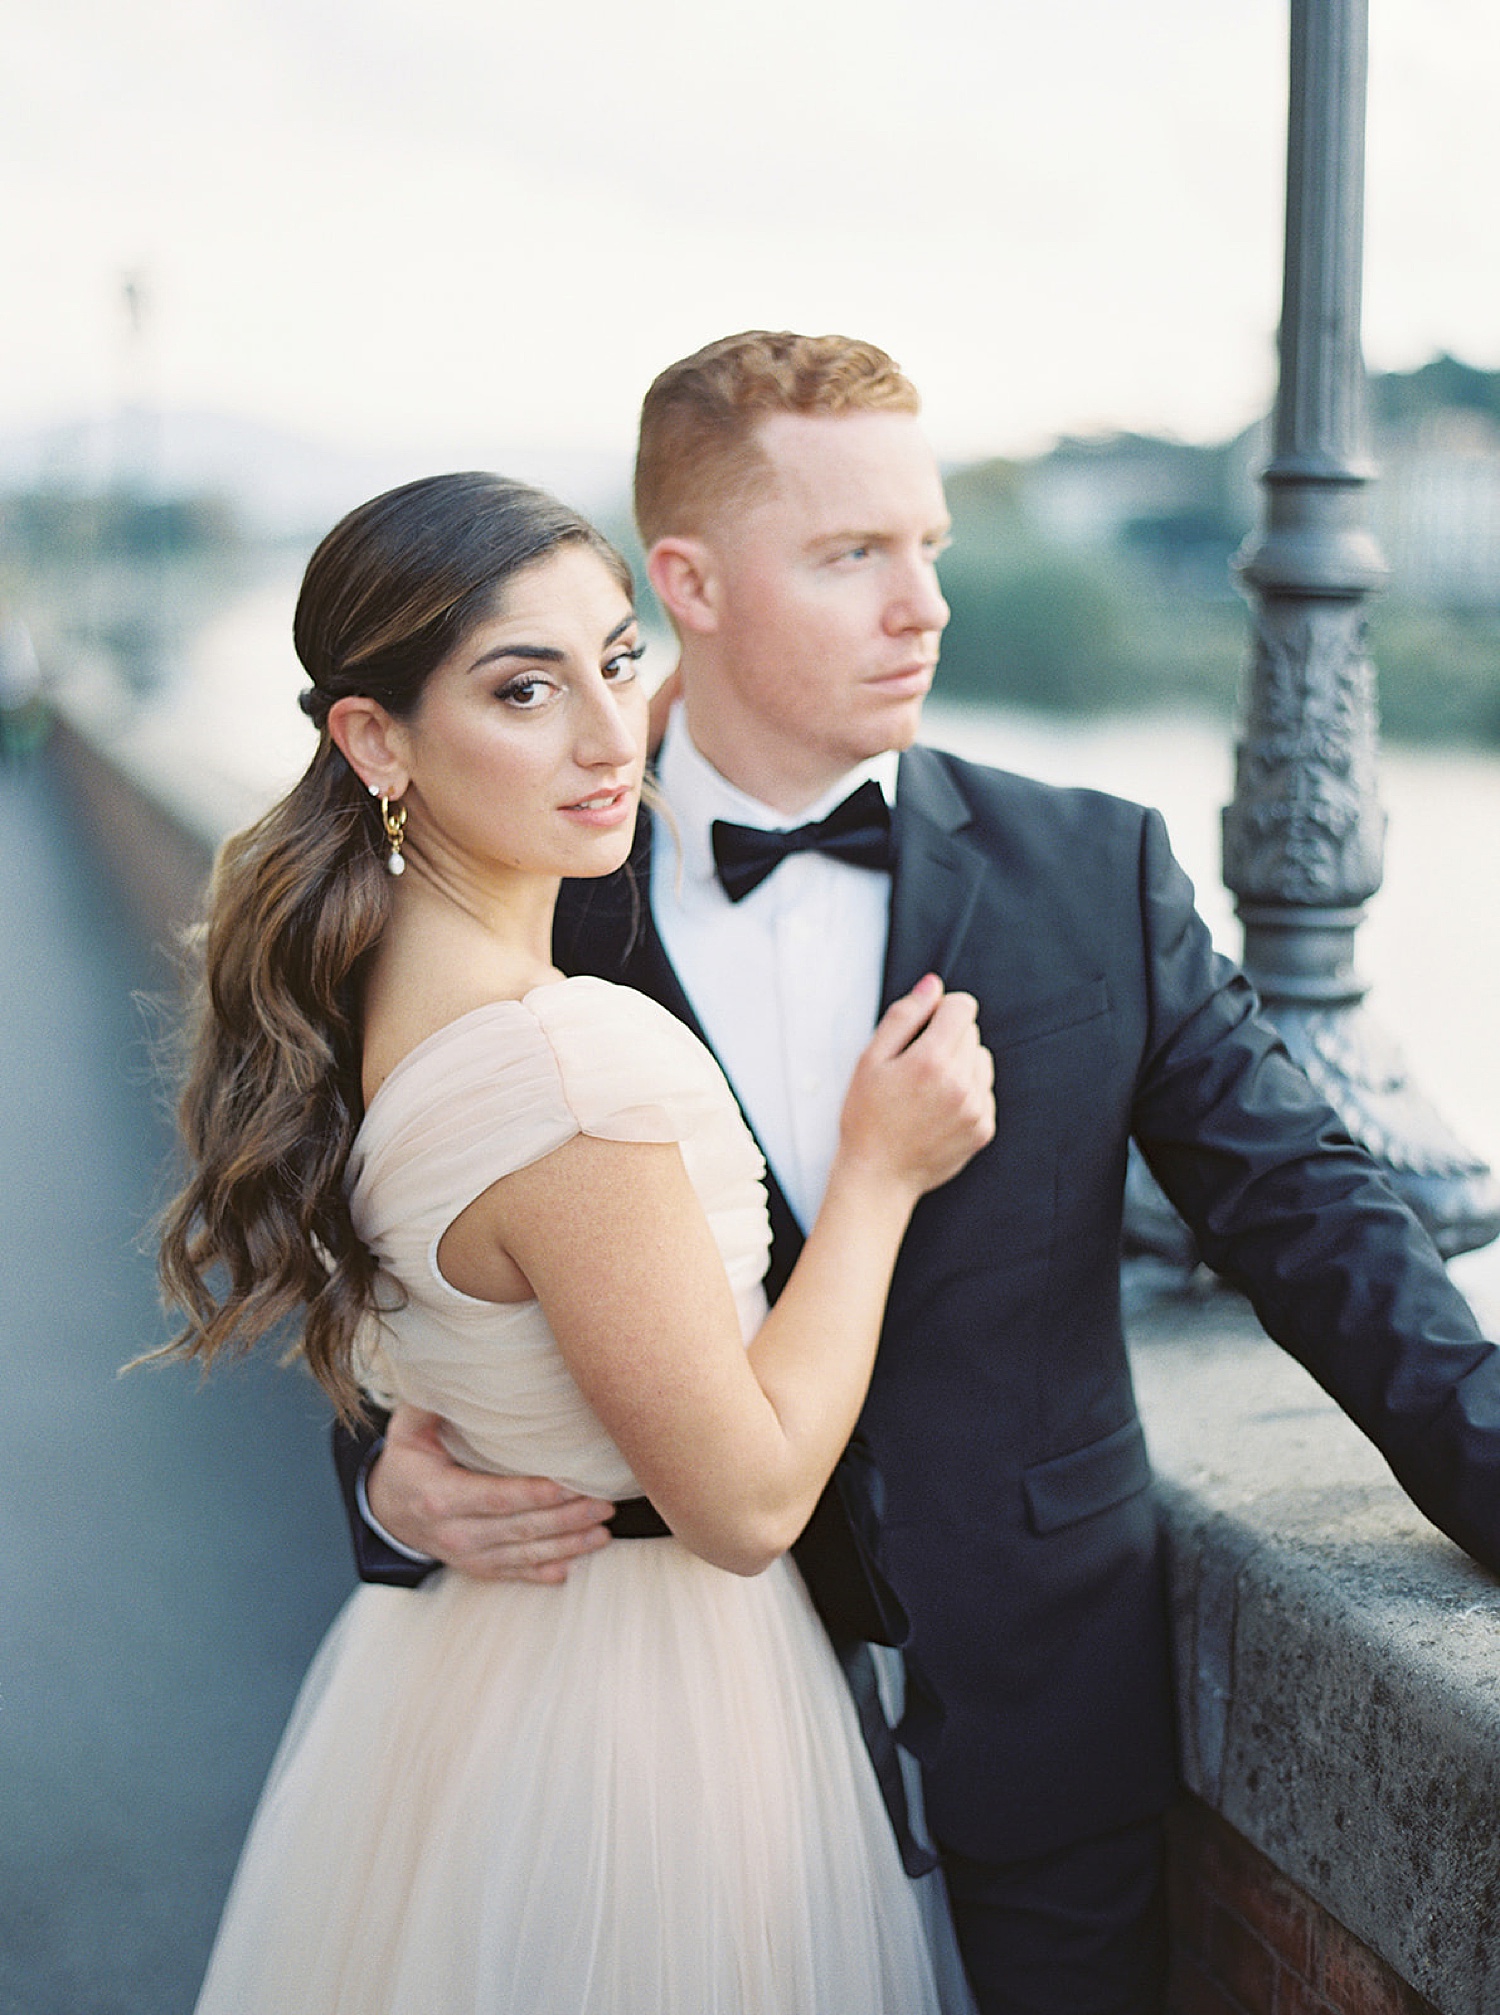 woman wears luxury wedding dress on Italian bridge with new husband wearing suit and tie